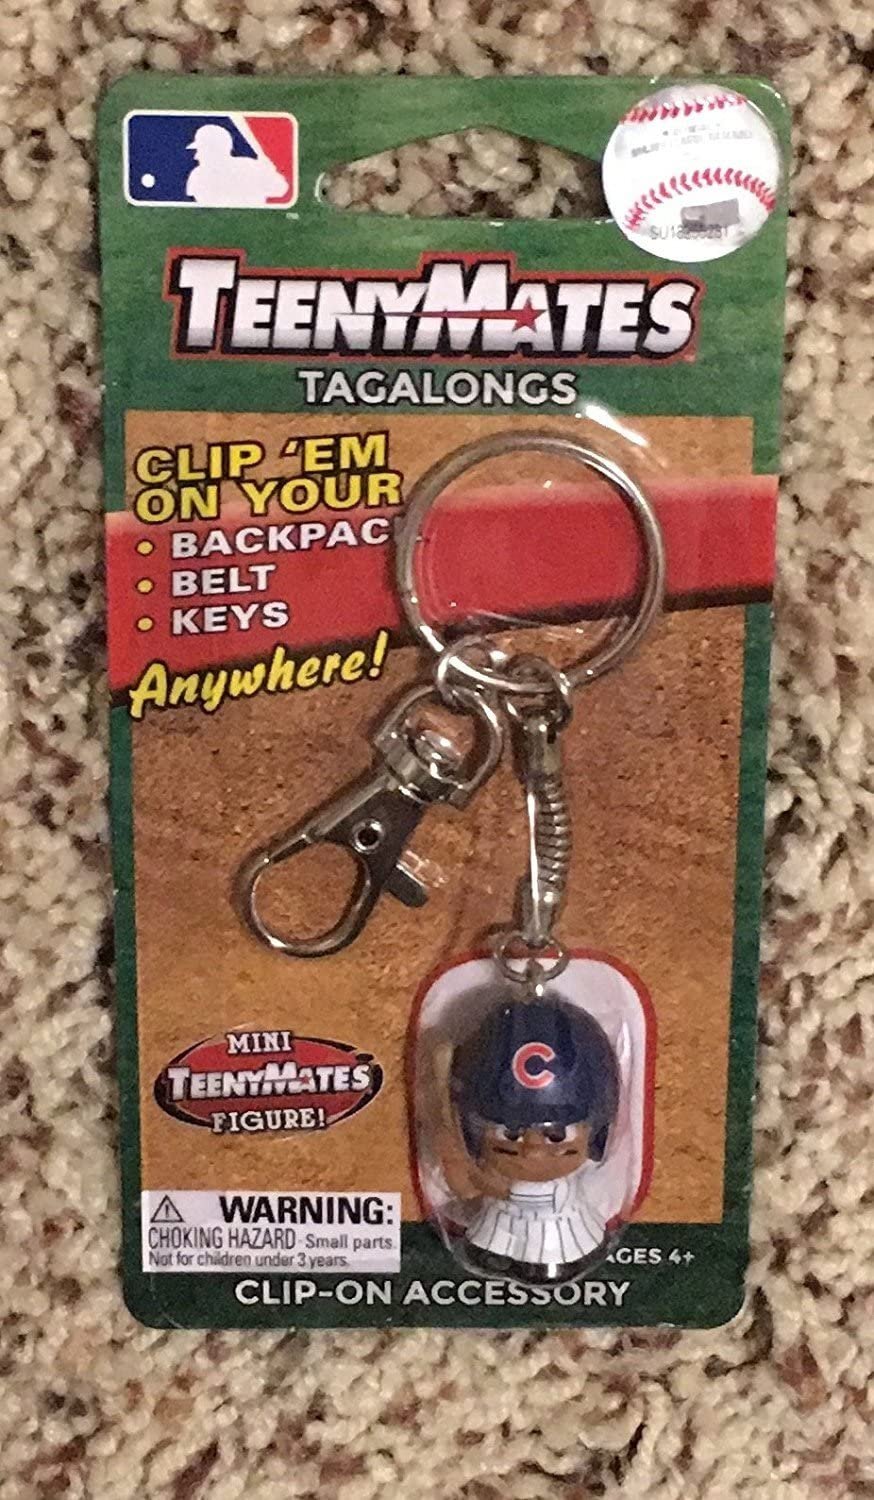 Texas Rangers Teeny Mate Tagalongs Keychain